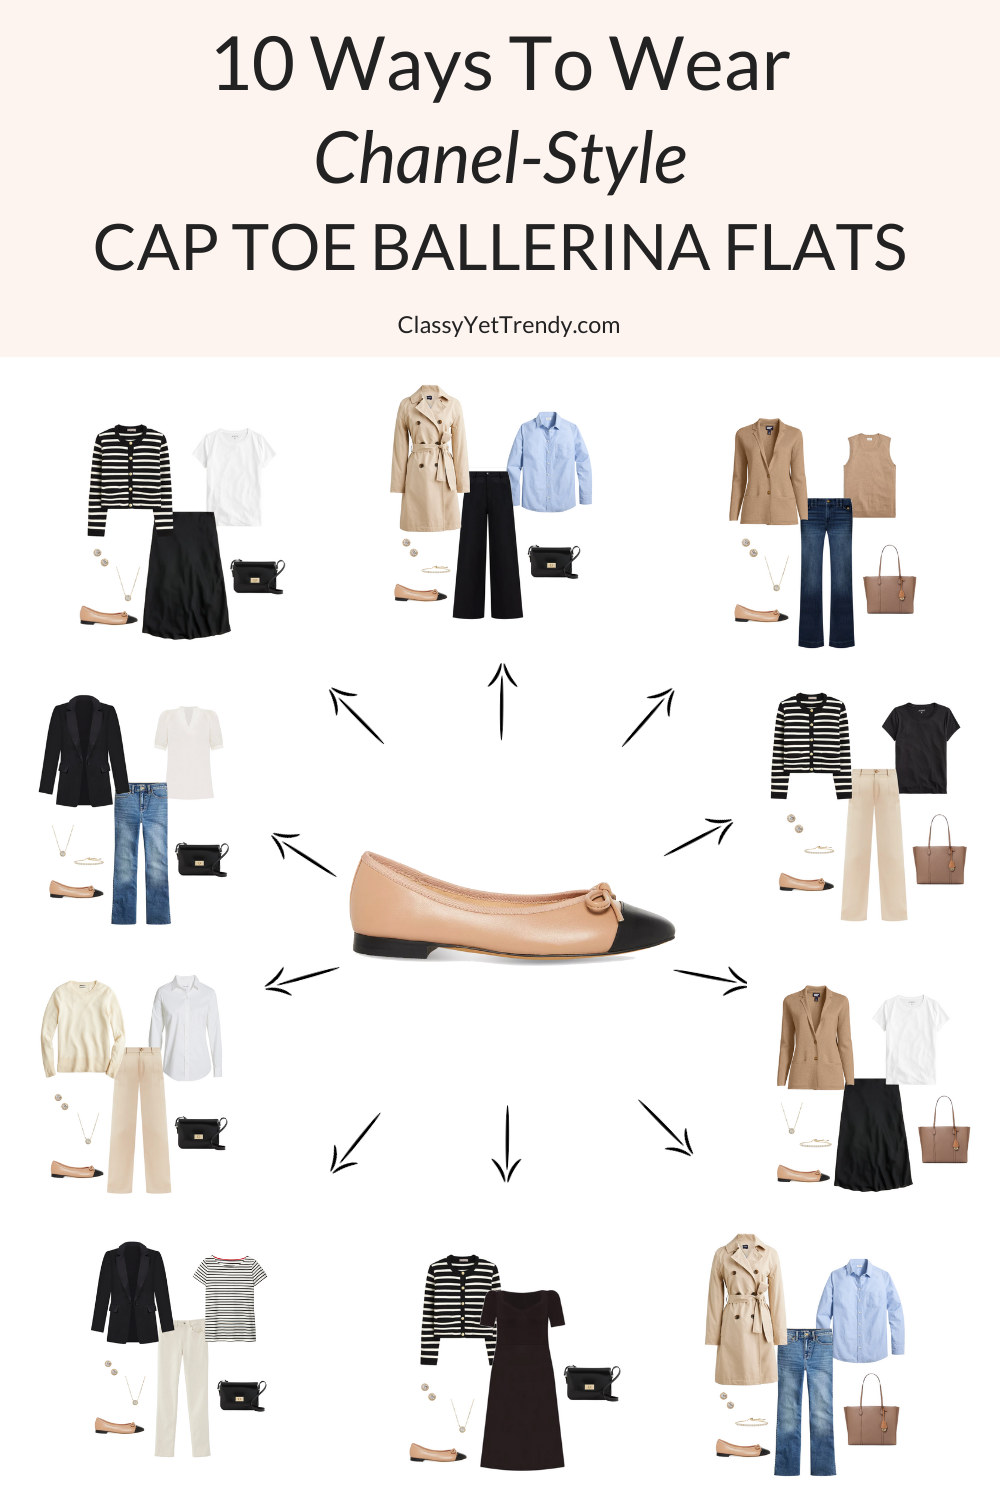 10 Ways To Wear Chanel-Style Cap Toe Ballerina Flats - Classy Yet